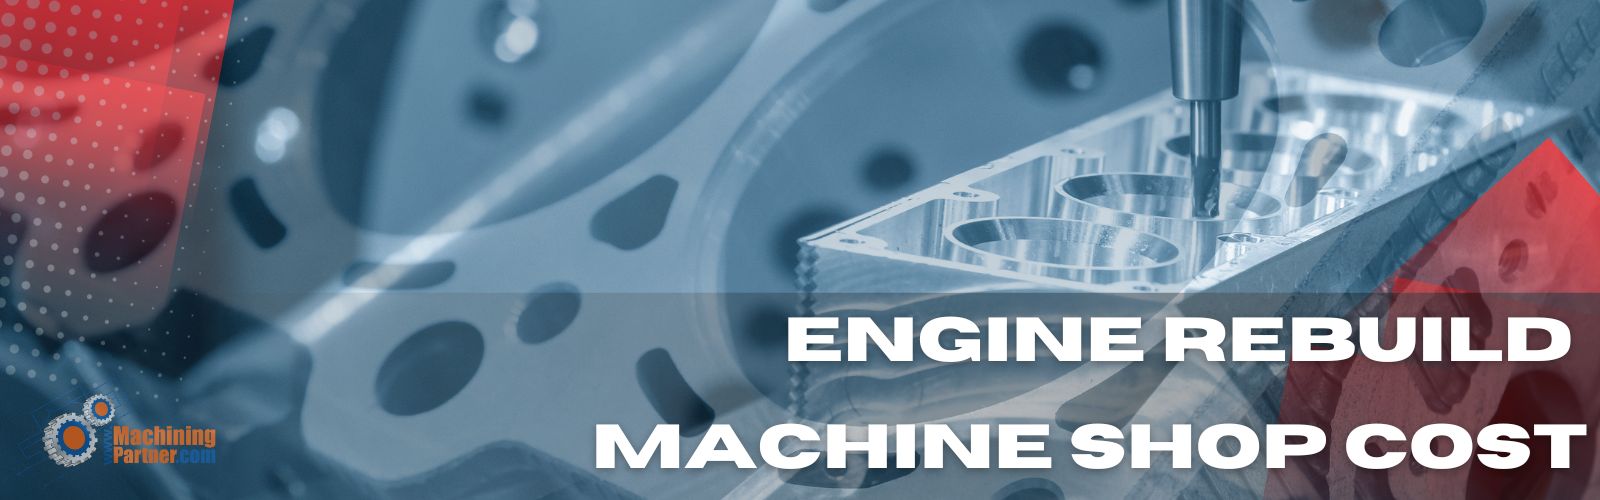 engine rebuild machine shop cost